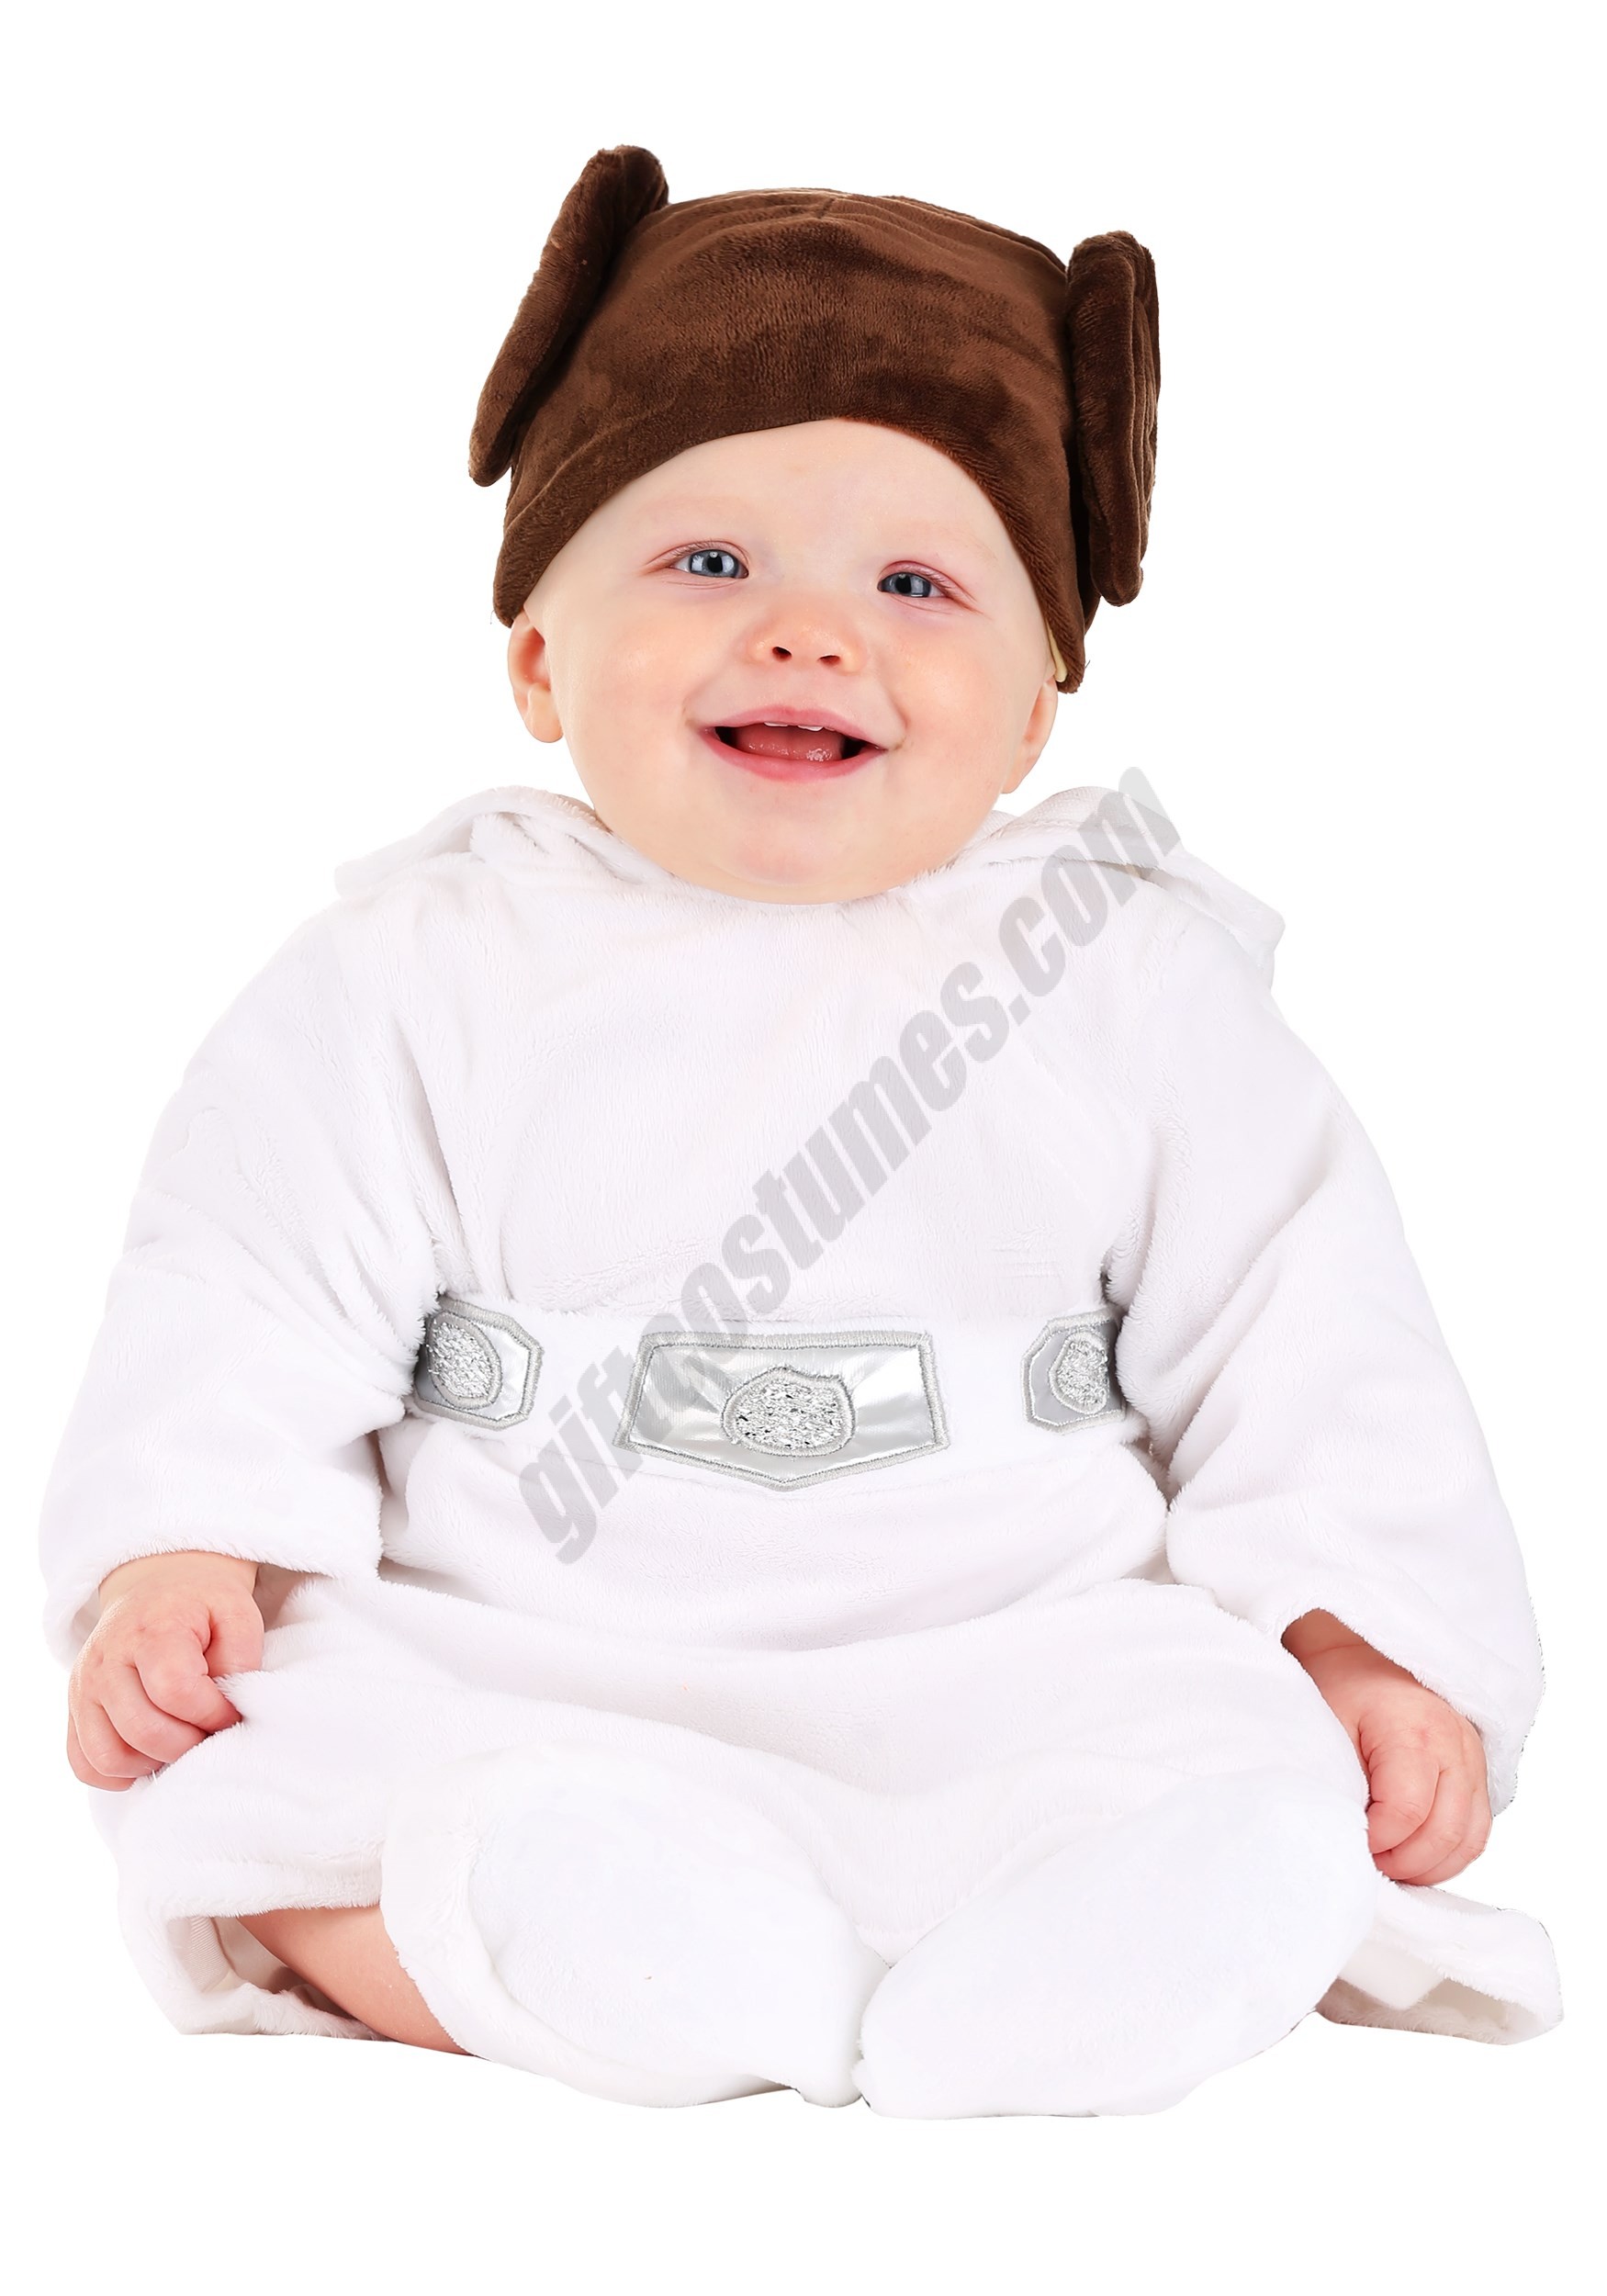 Princess Leia Infant Star Wars Costume Promotions - Princess Leia Infant Star Wars Costume Promotions